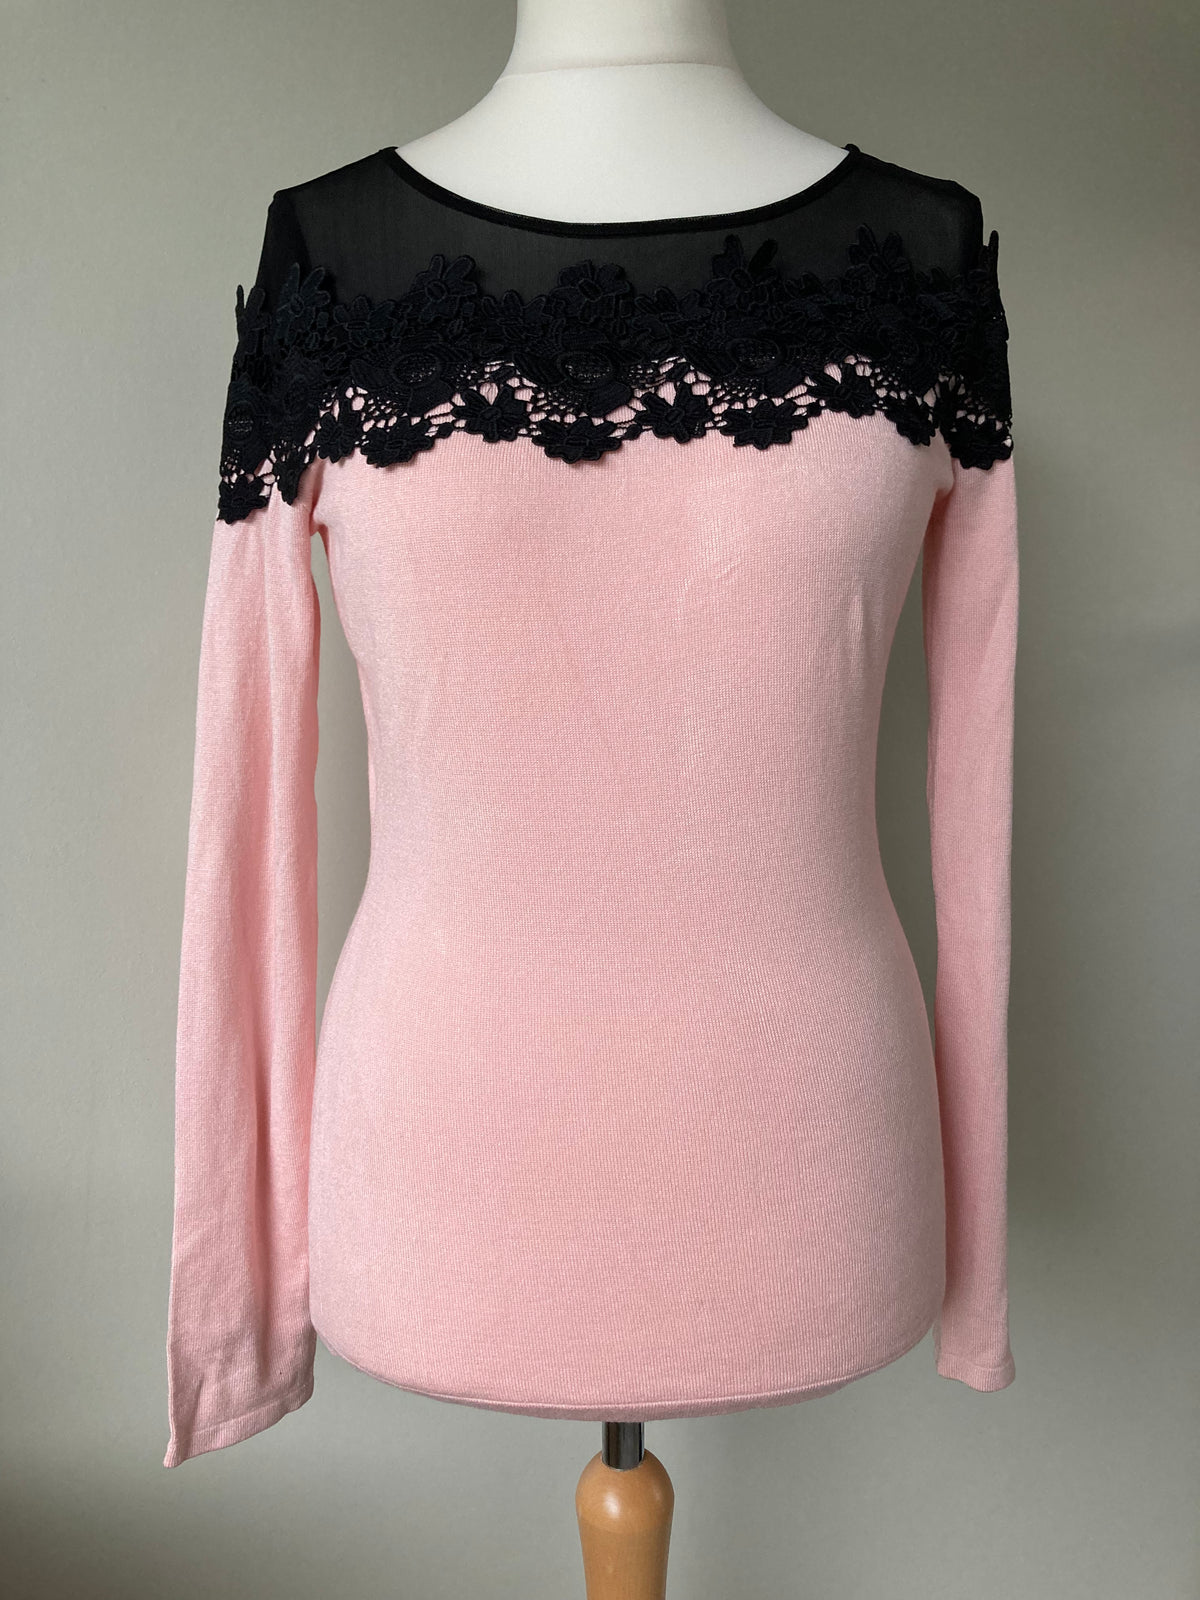 Black & Rose Lace Jumper by MELROSE - Size 12